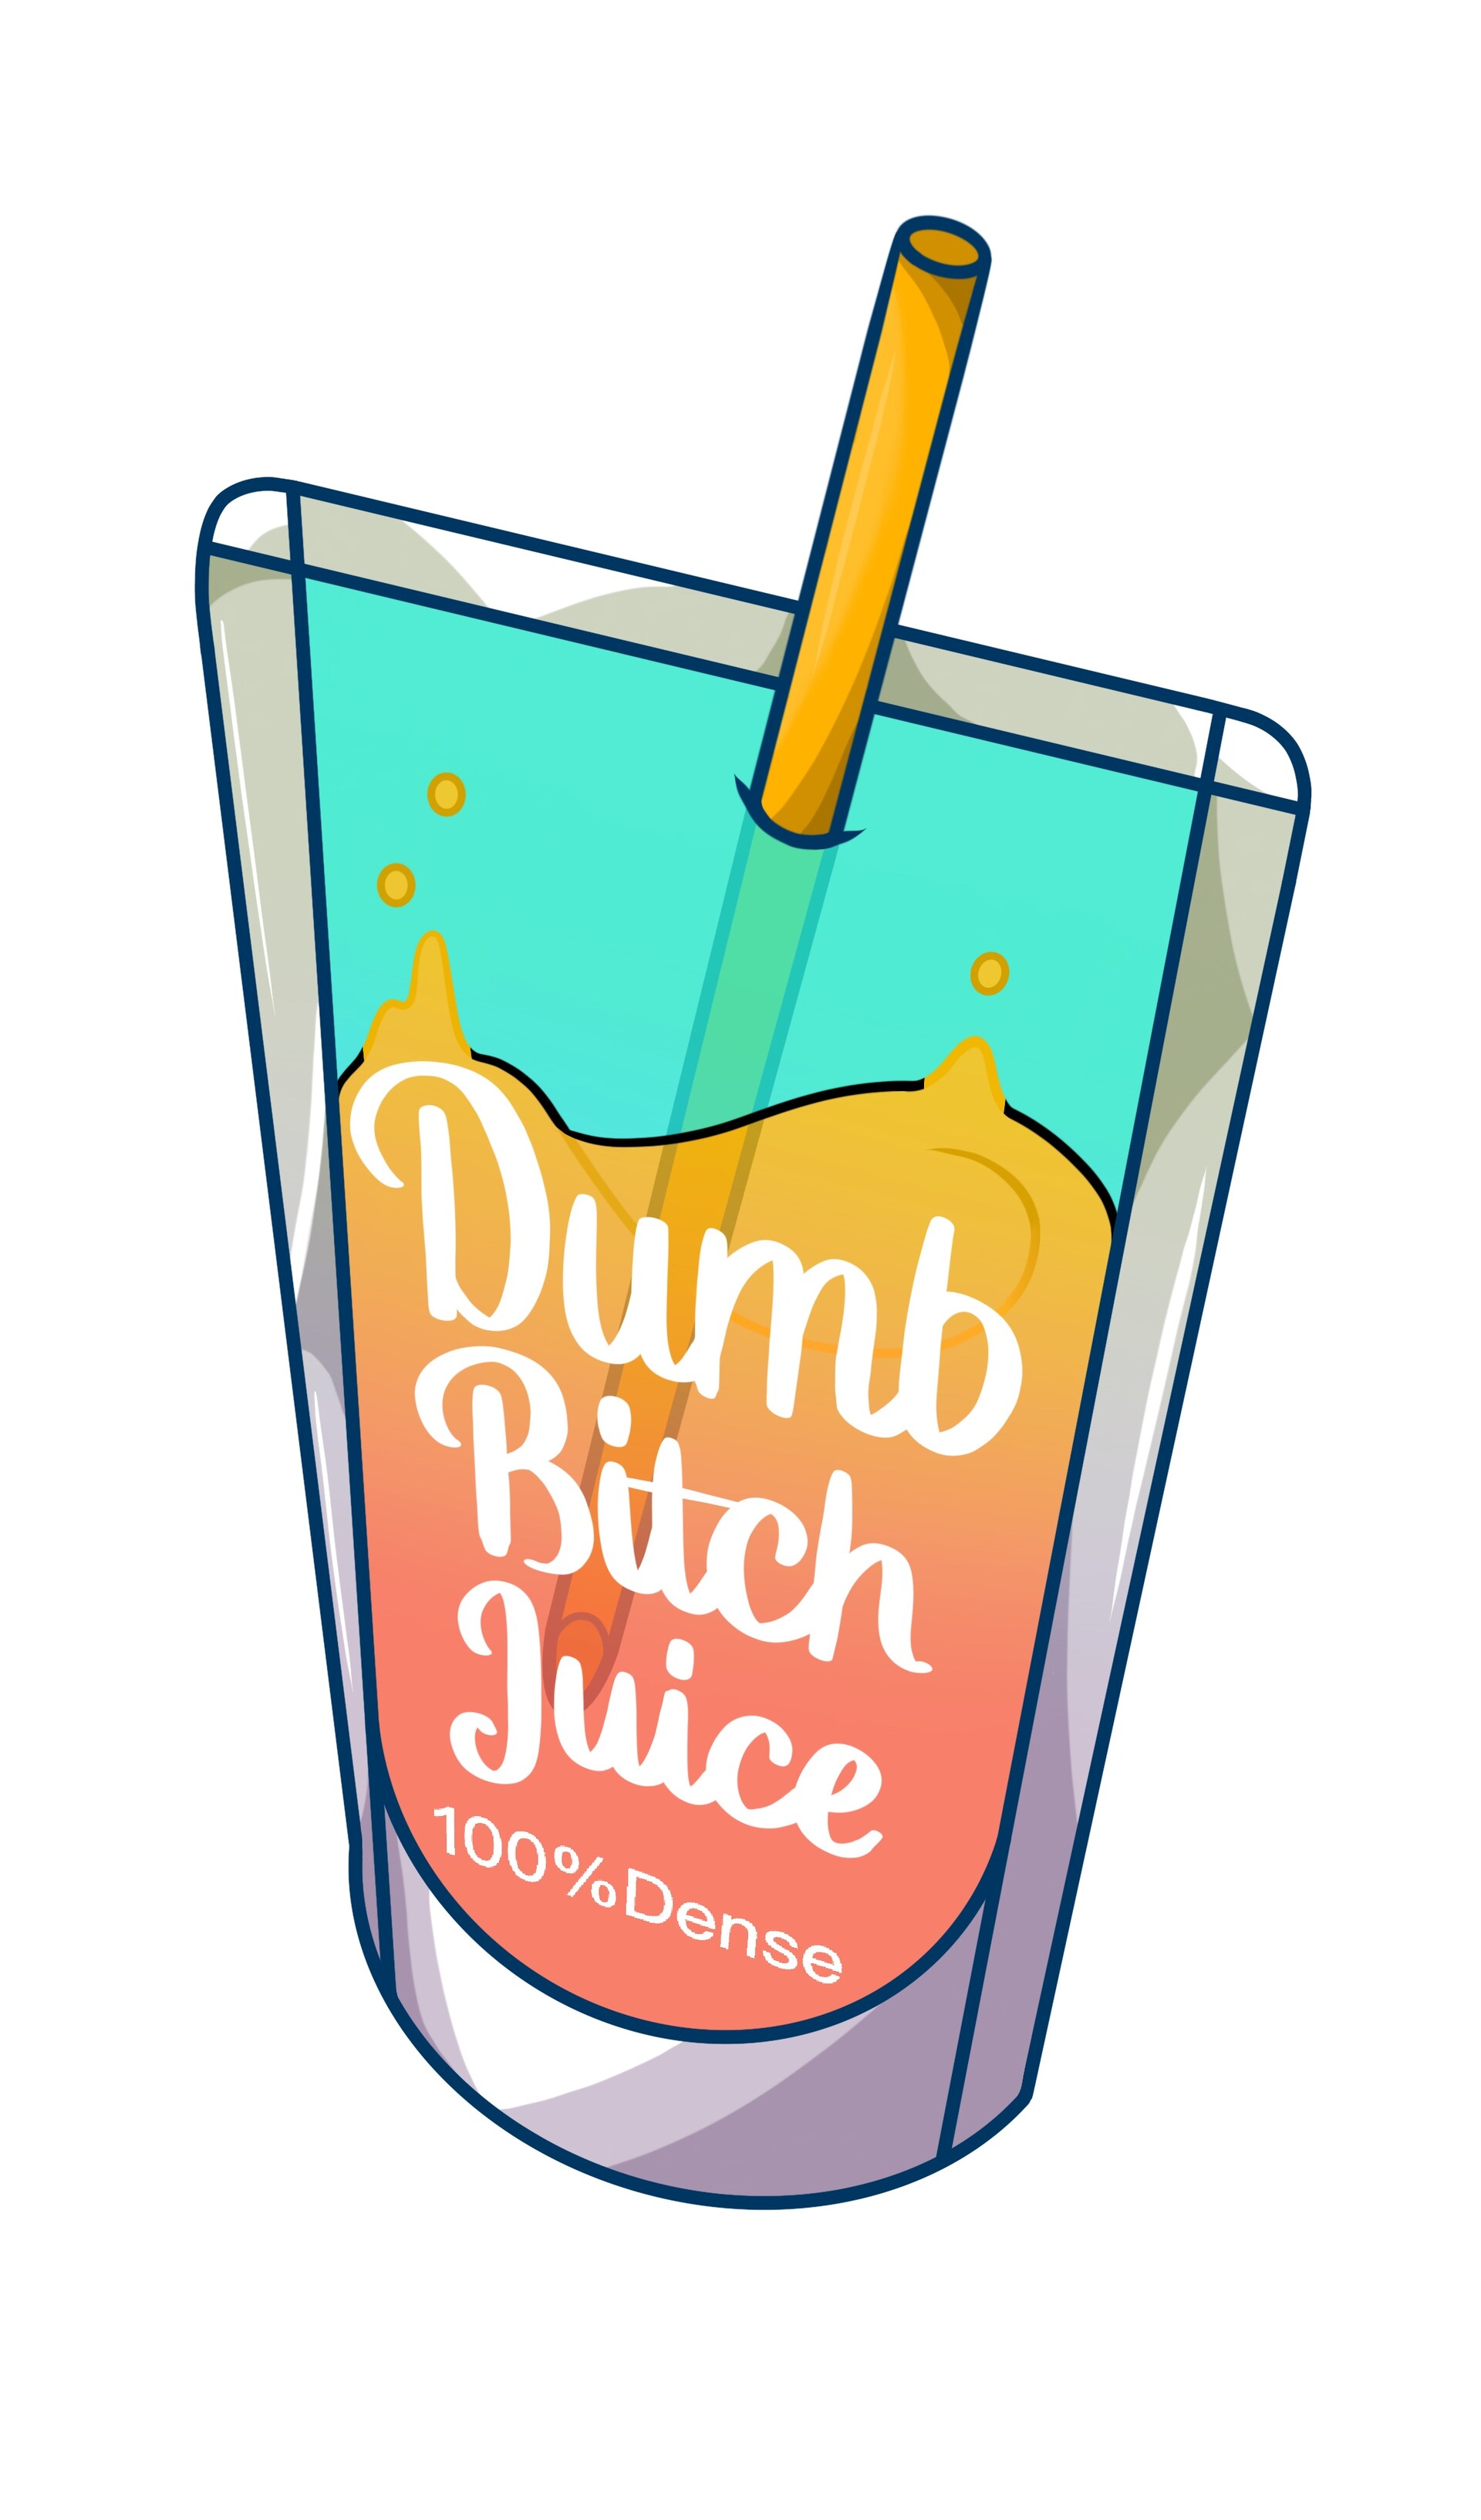 ArtStation - Dumb Bitch Juice